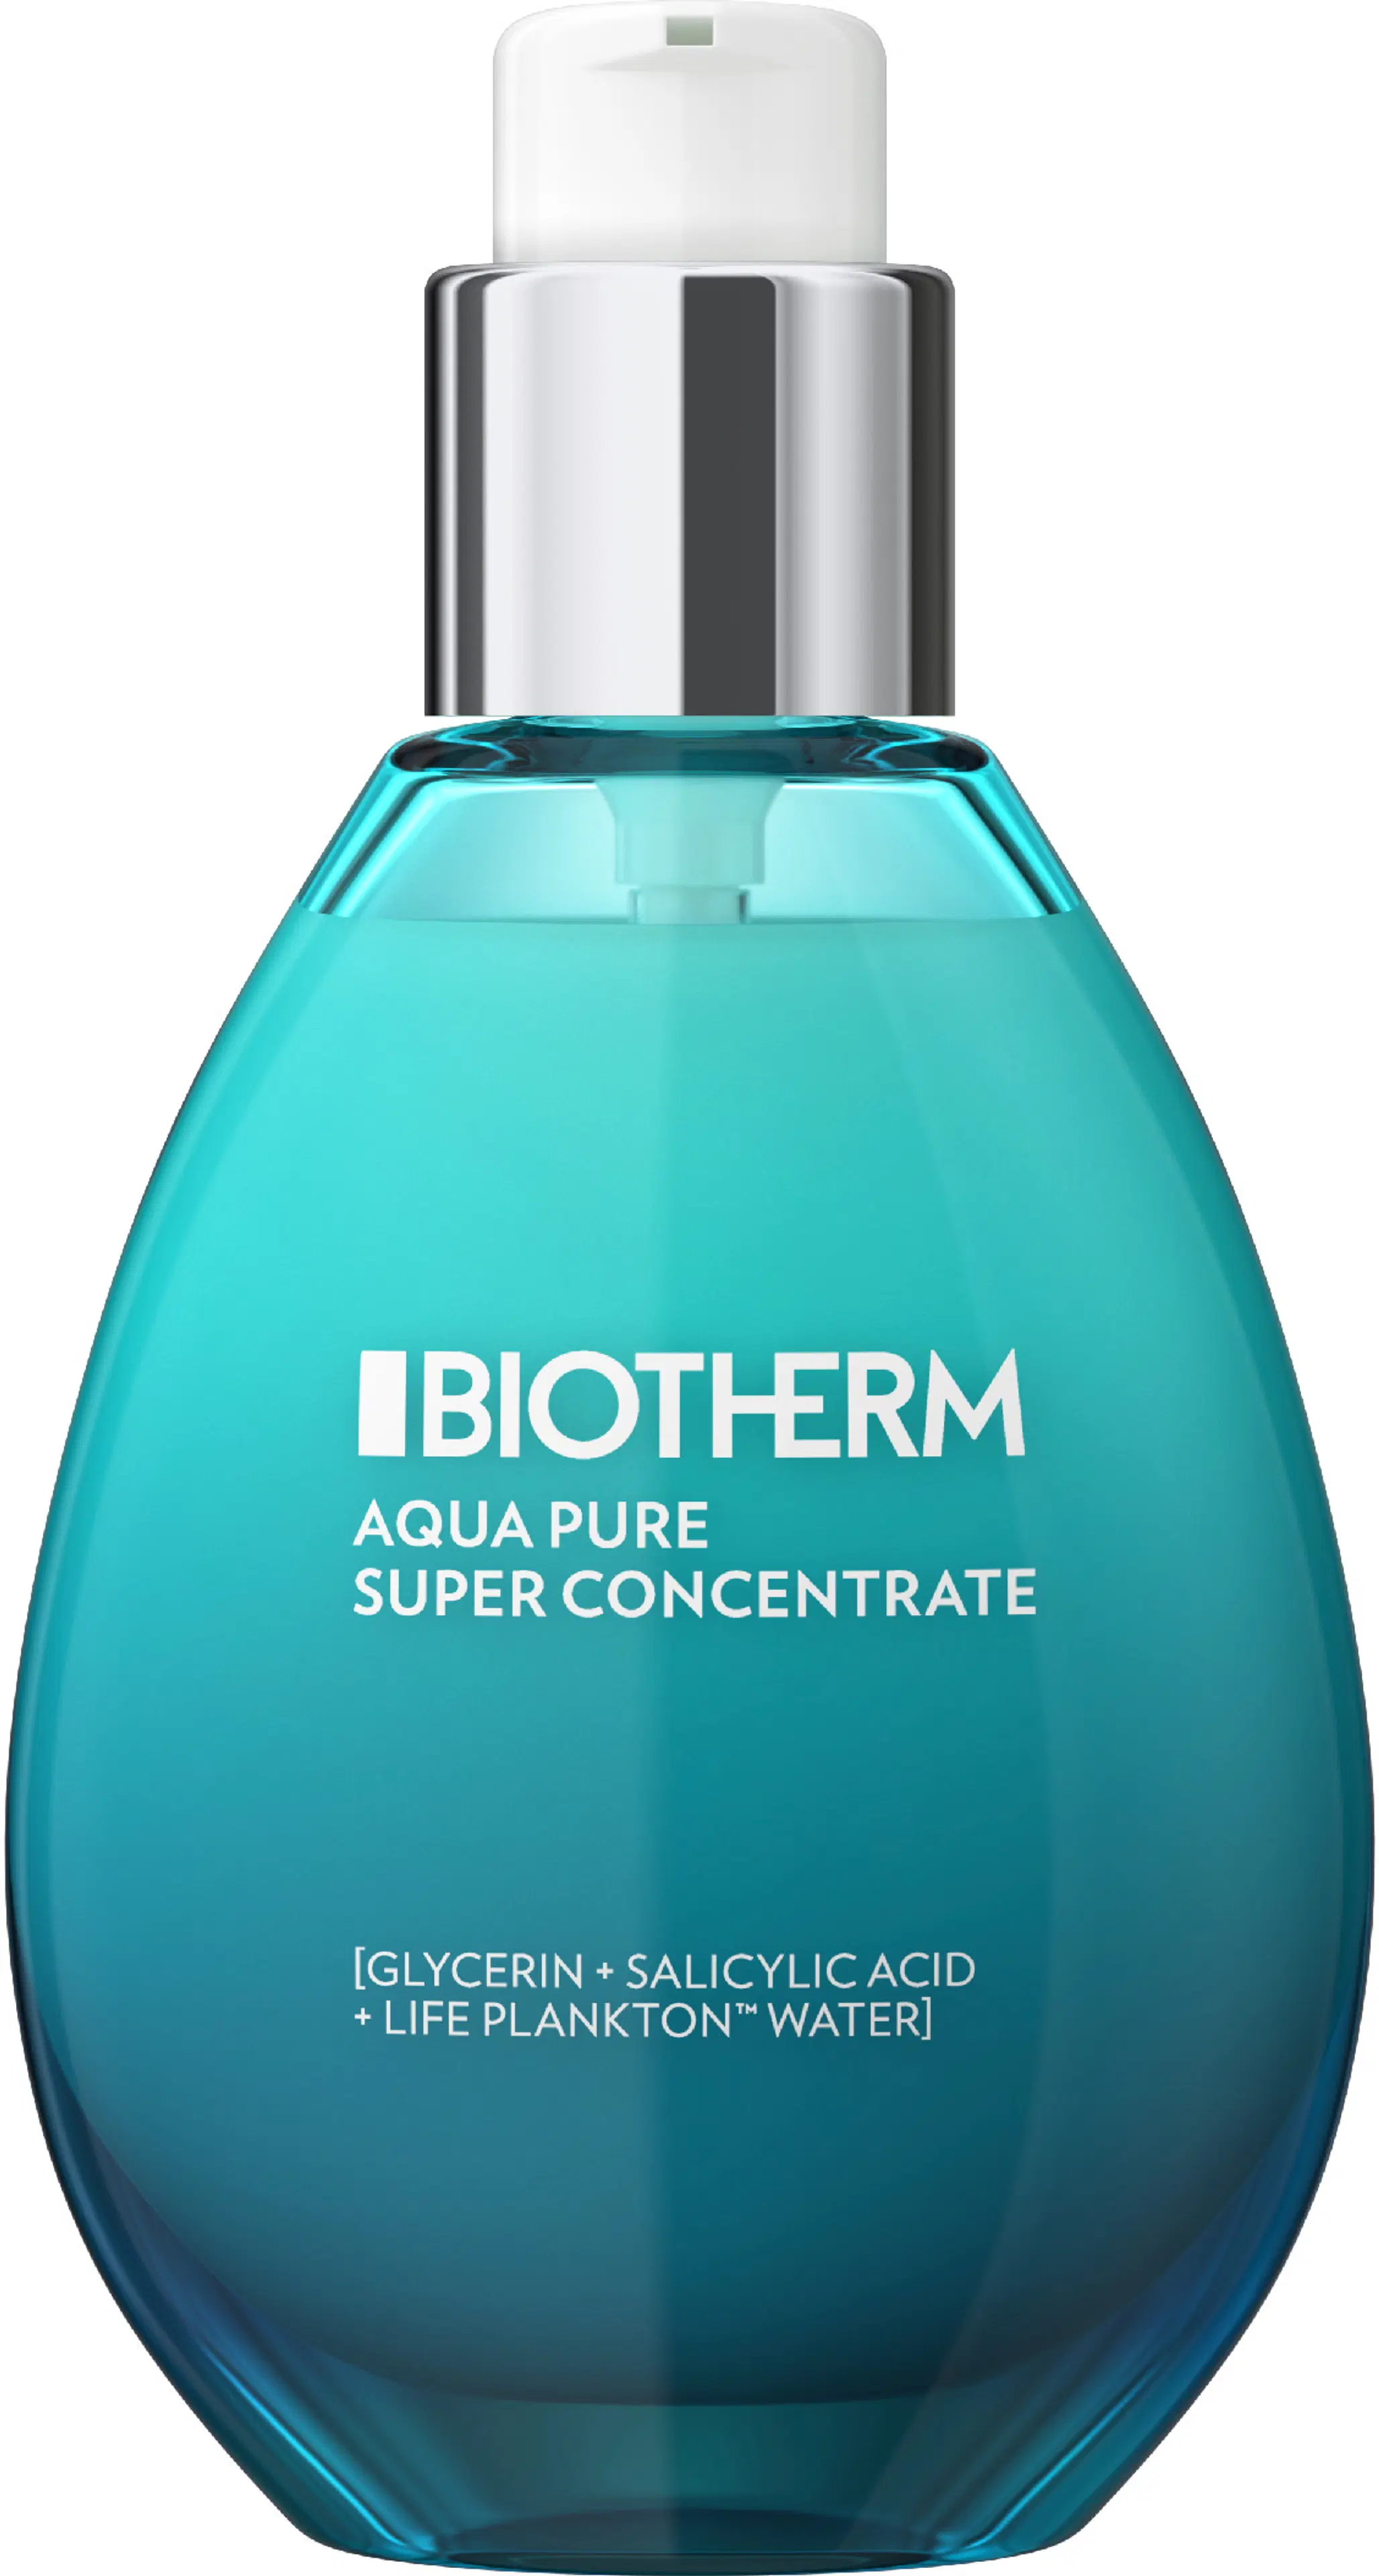 Biotherm Aqua Pure Super Concentrate kasvovoide 50 ml